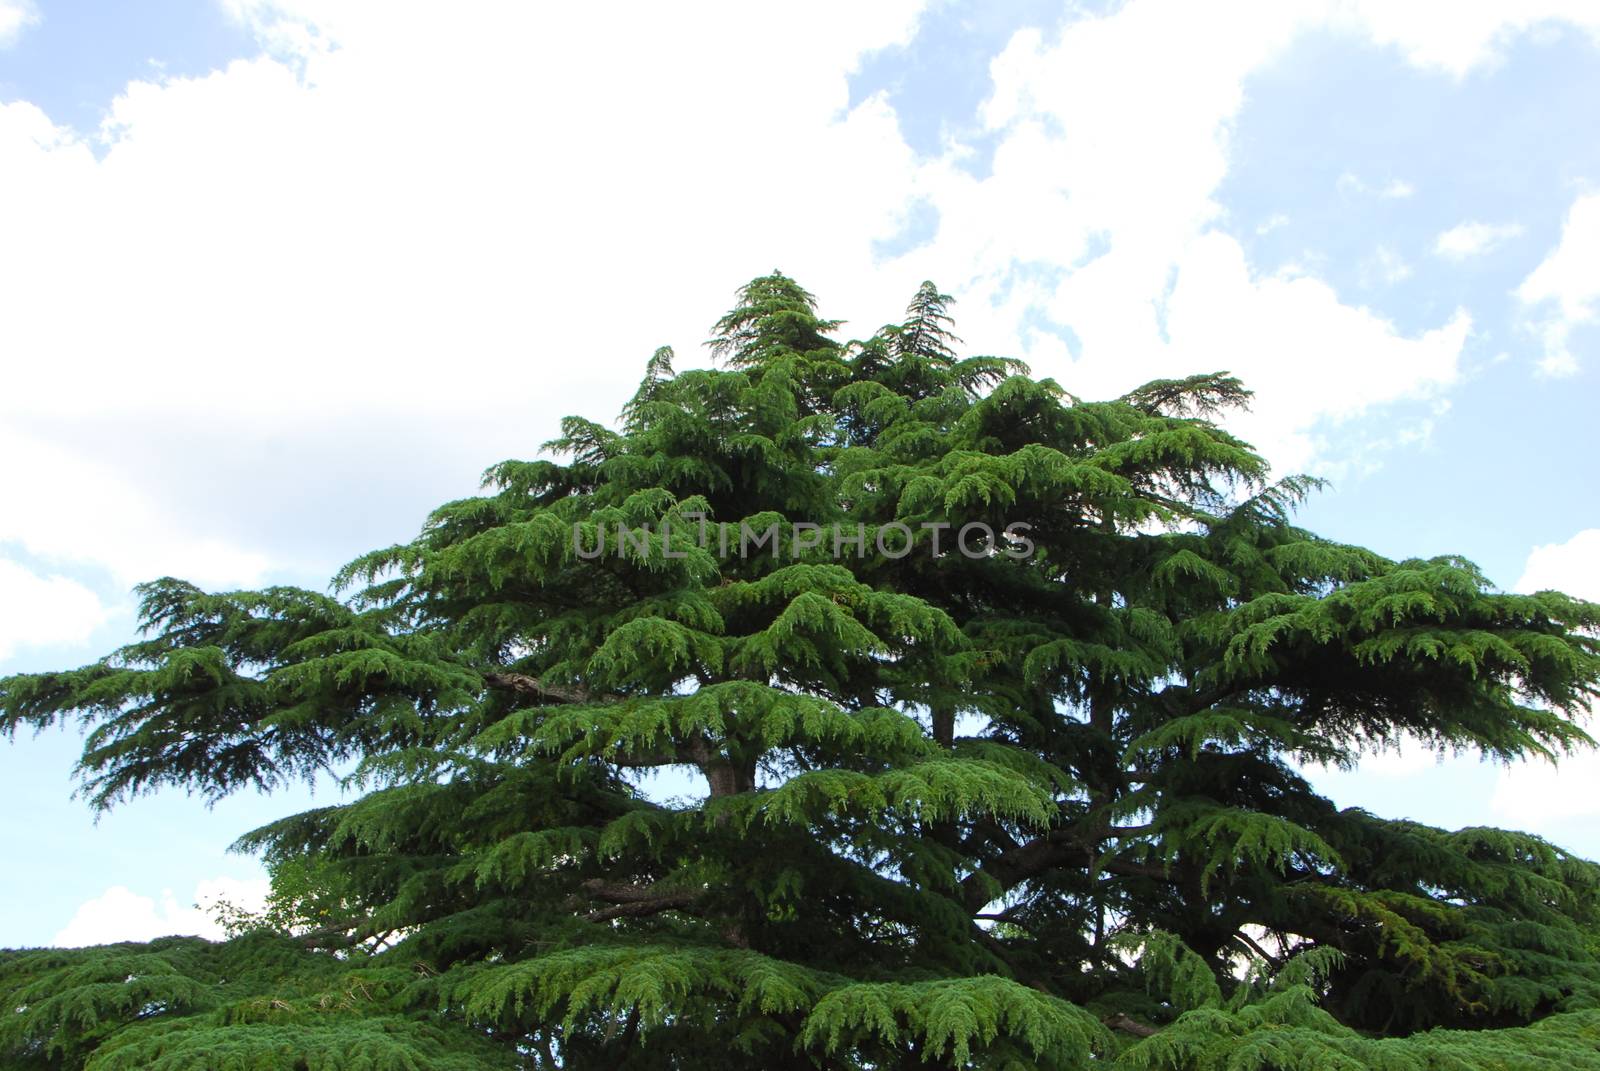 evergreen cedar Tree canopy by nikonite